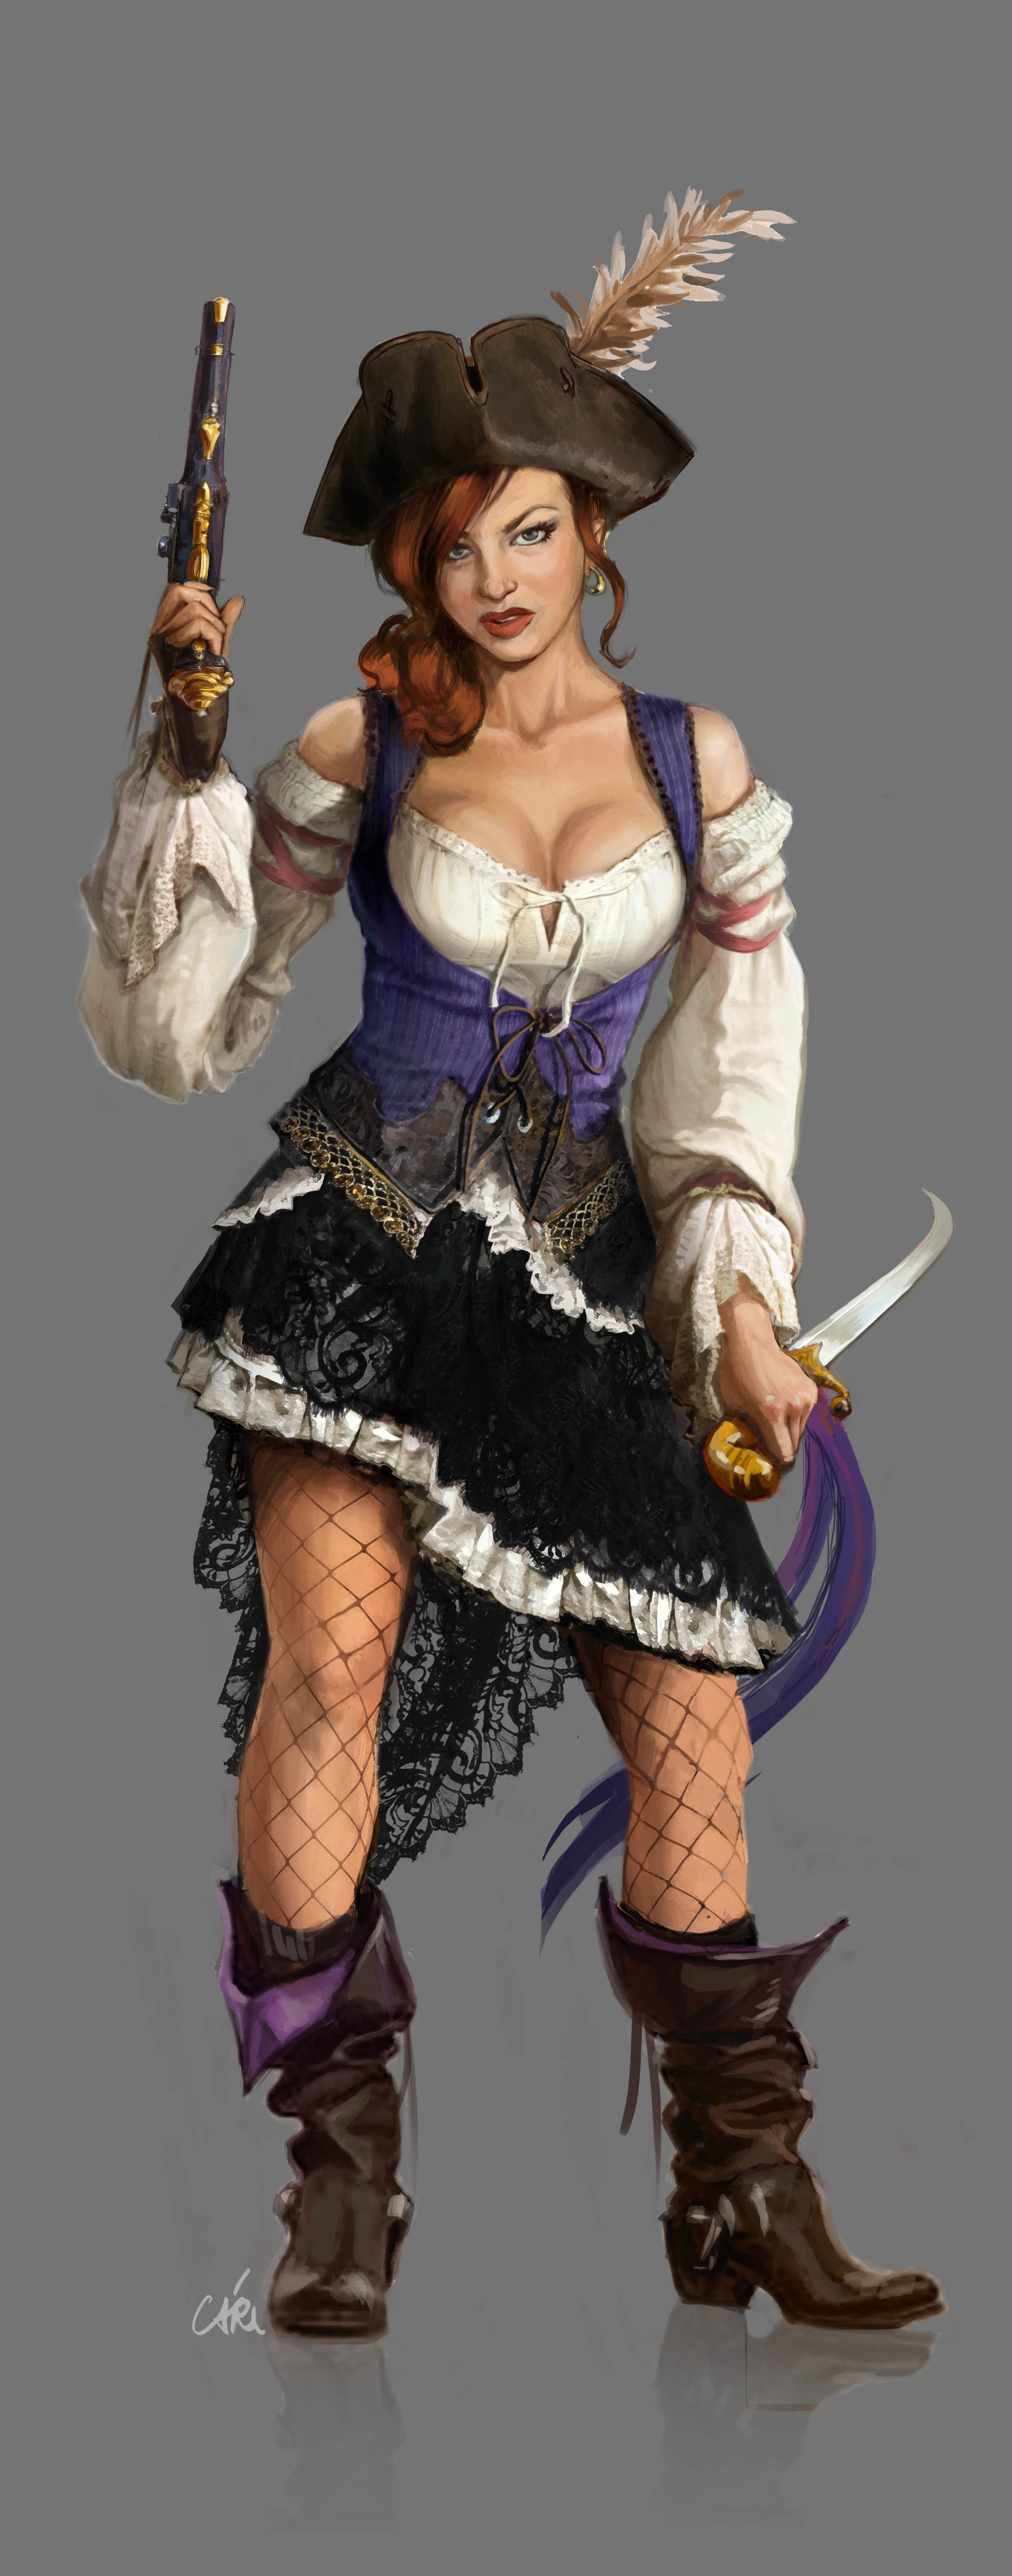 Sexy Pirate Women Art 8571